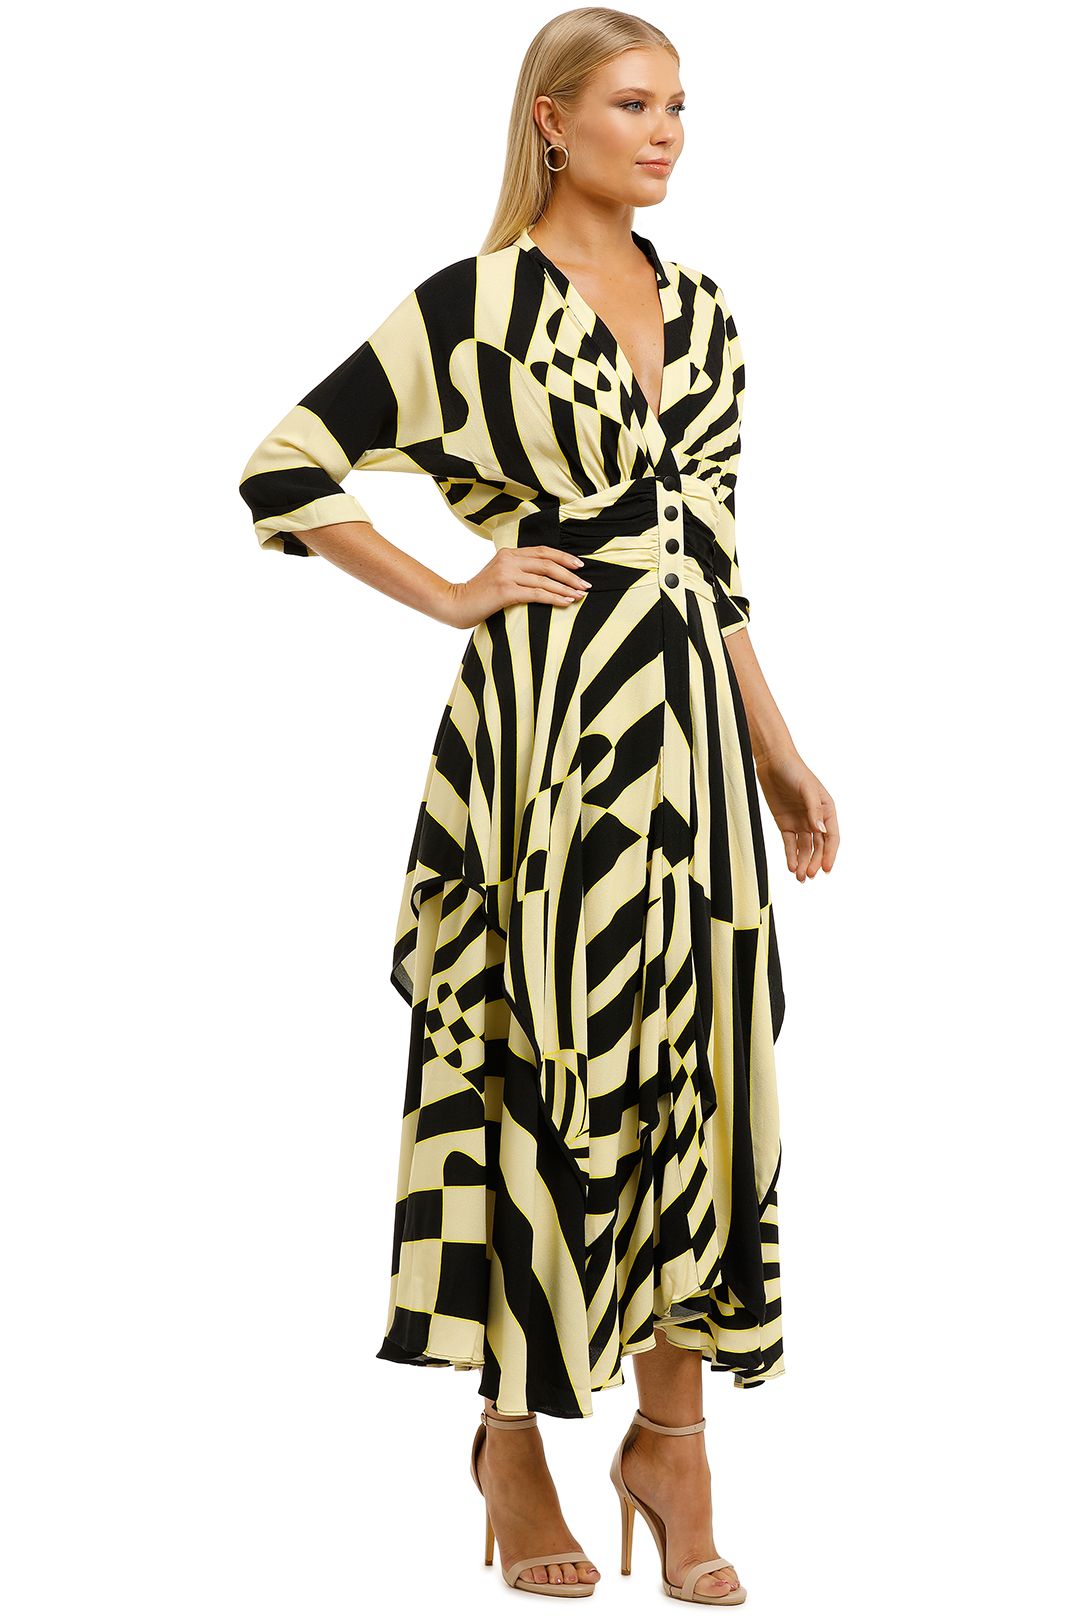 KITX-Stripes-Handkerchief-Shirt Dress-Zebra Print-Side